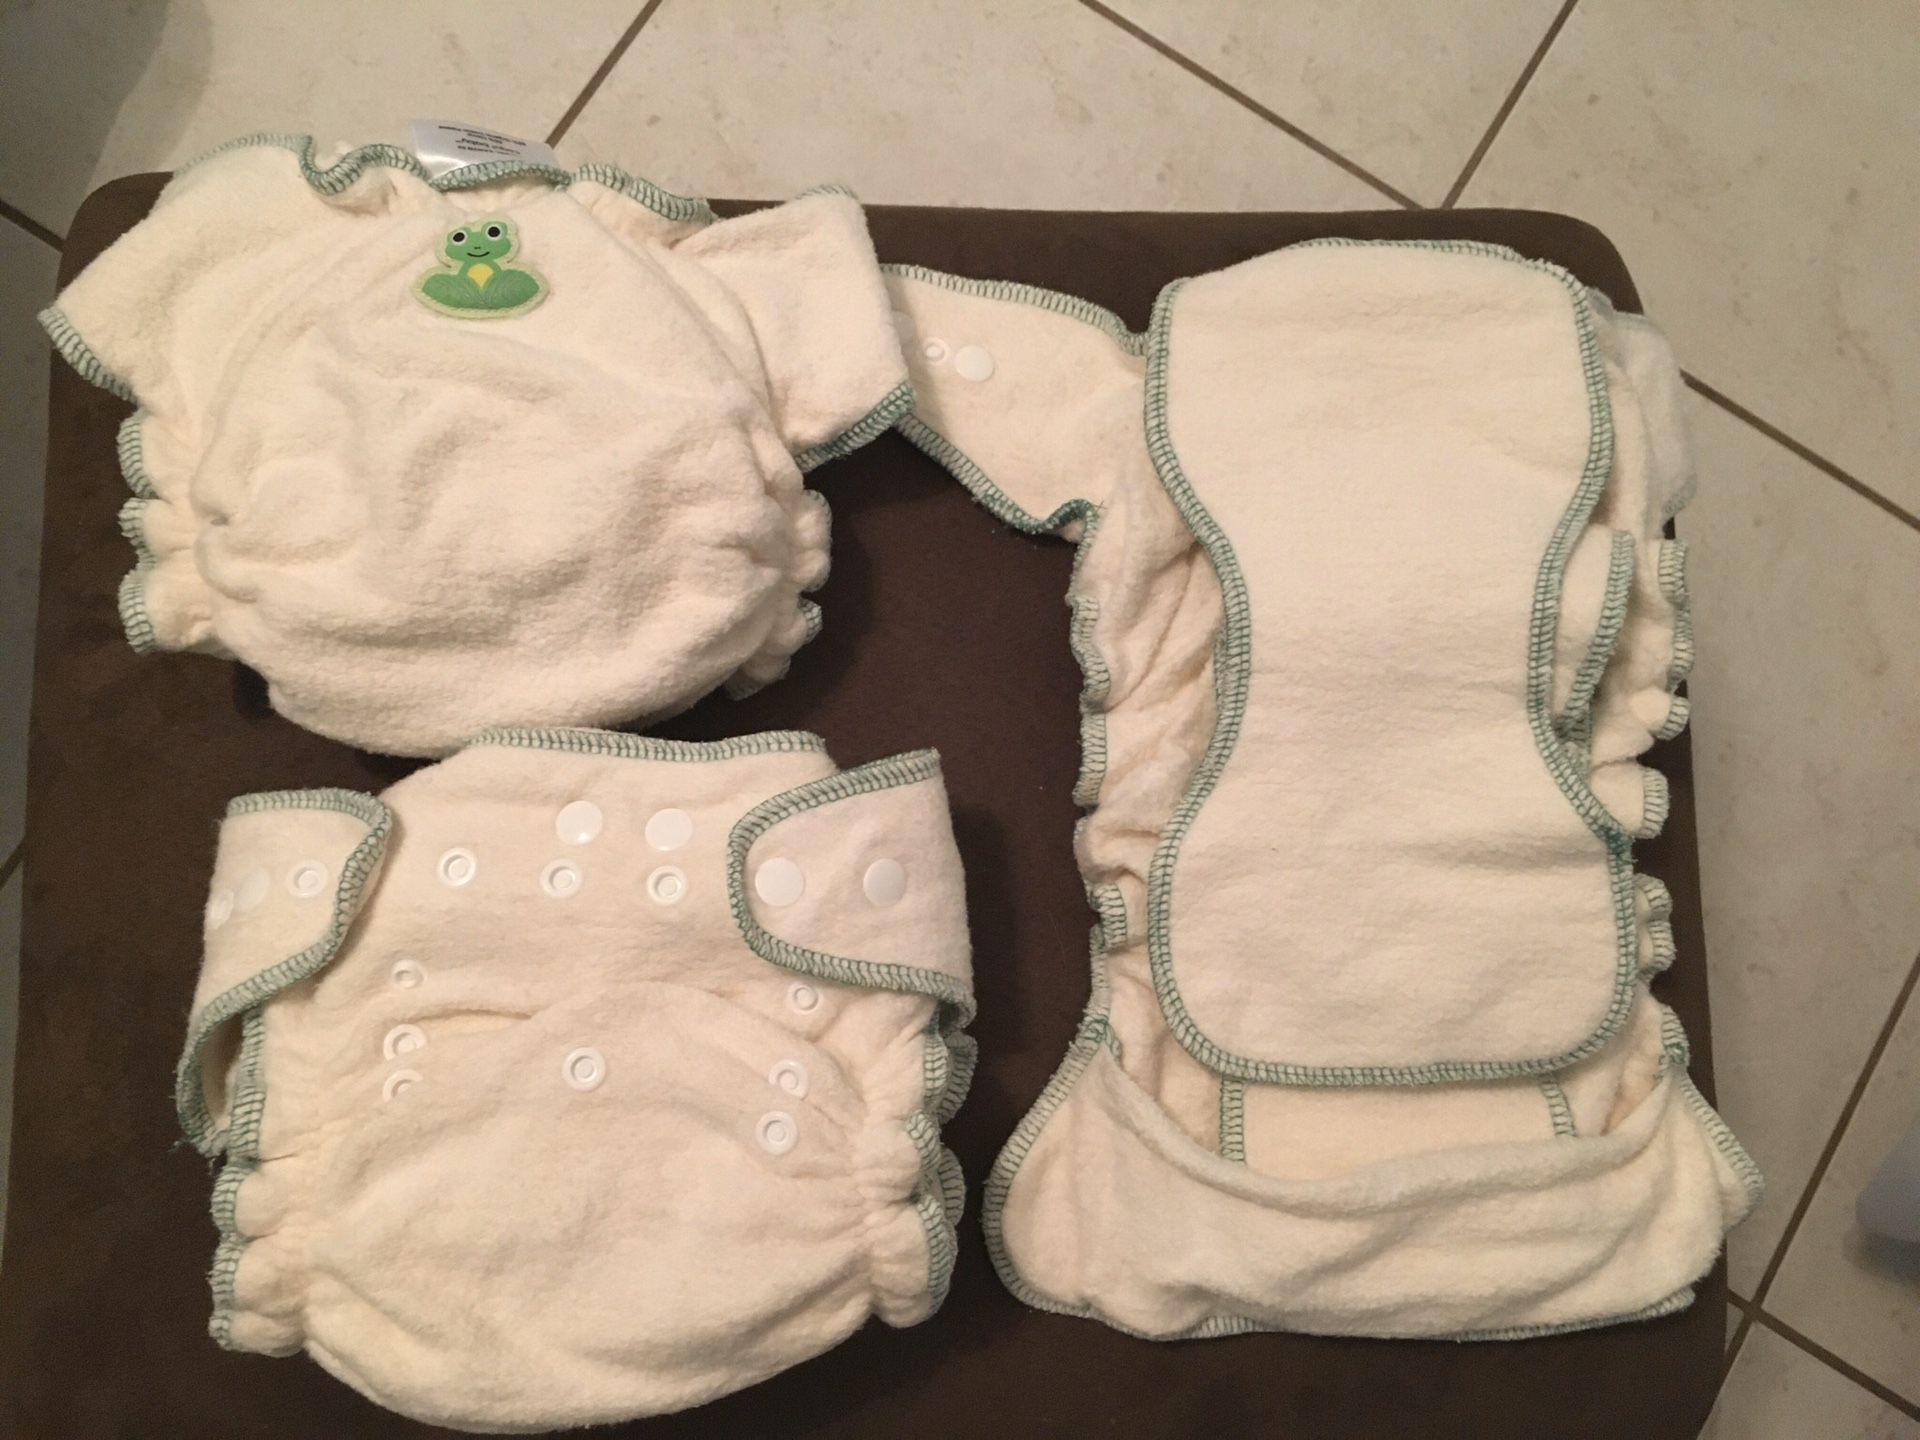 Hemp overnight / cloth diapers